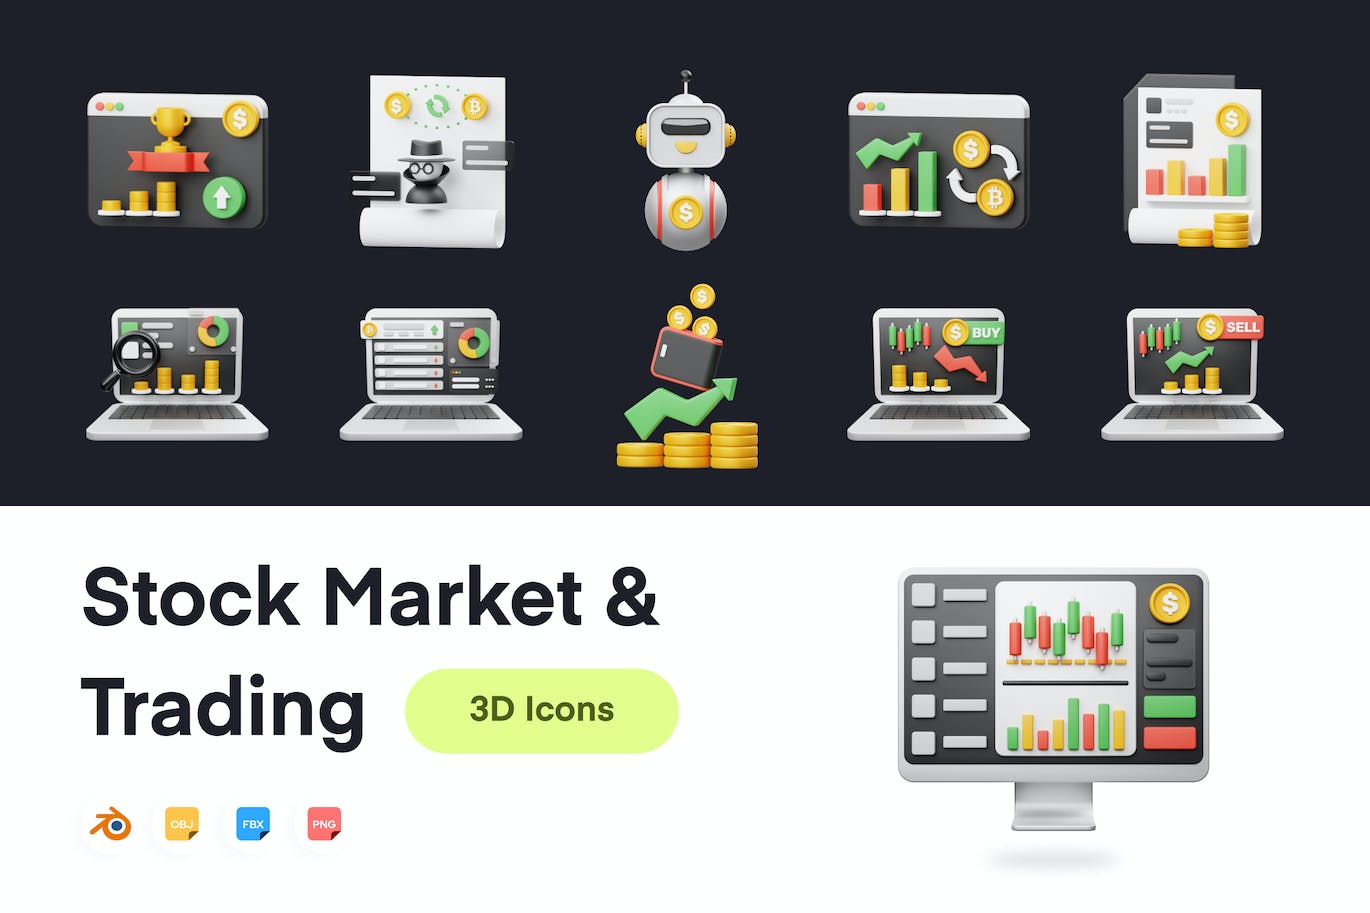 股票市场和交易3D图标模型素材 Stock Market And Trading 3D Icon